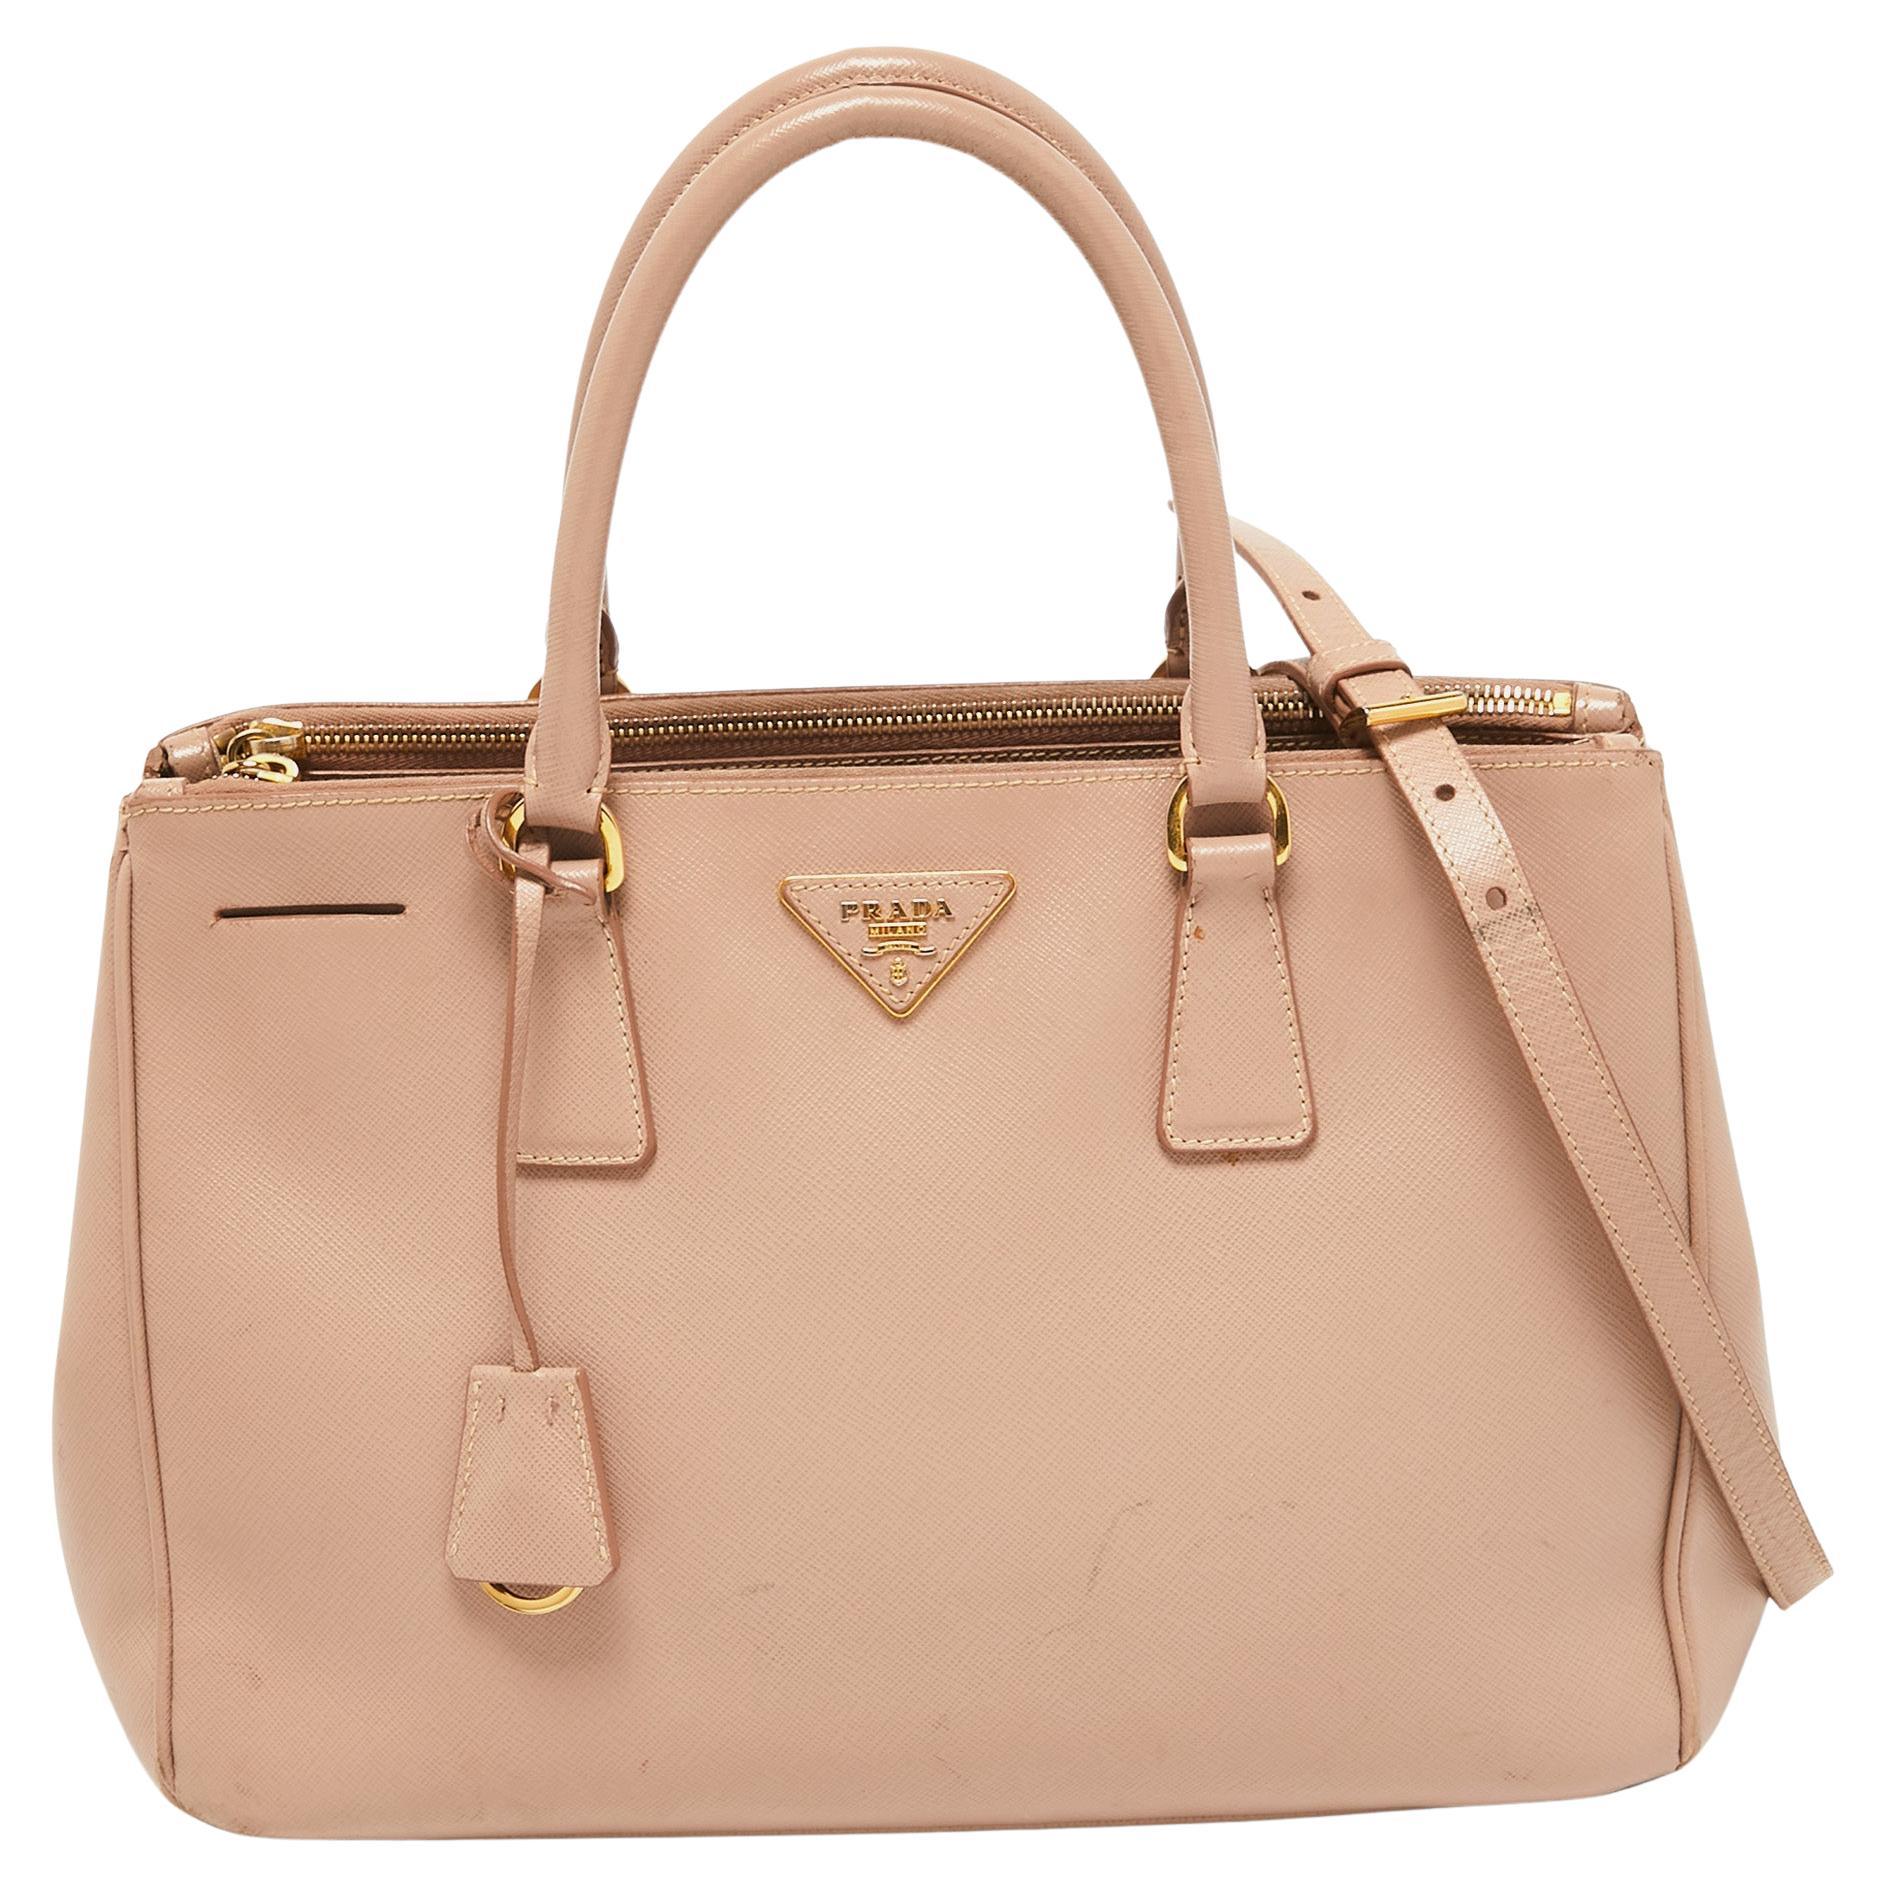 Chanel Pink Bag 2021 - 17 For Sale on 1stDibs